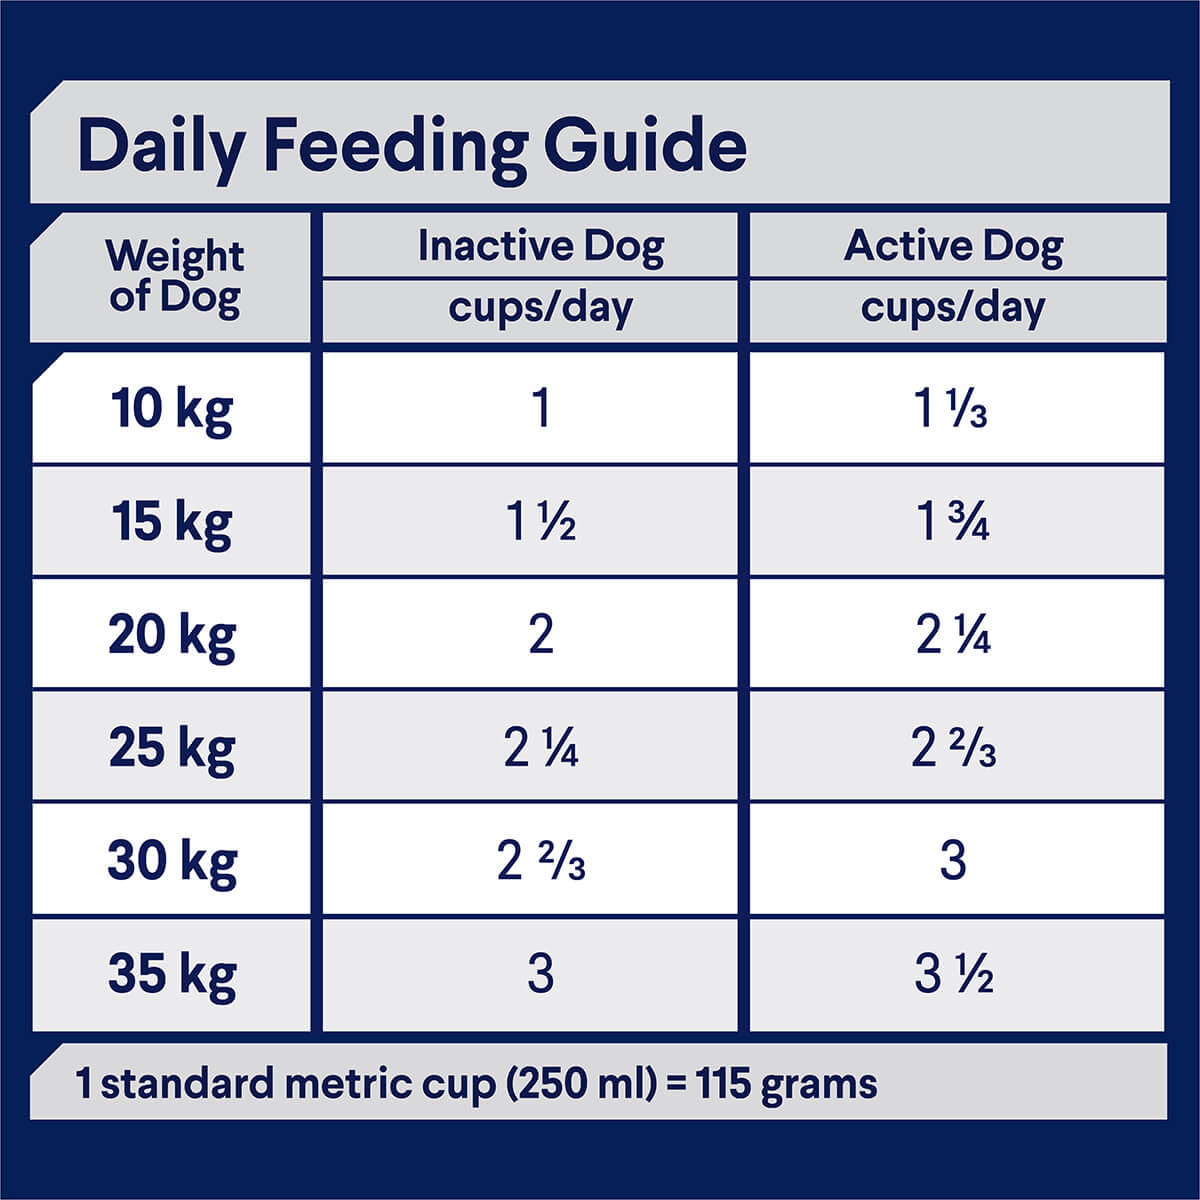 Advance Adult Chicken Dry Dog Food (122711000043) [default_color]